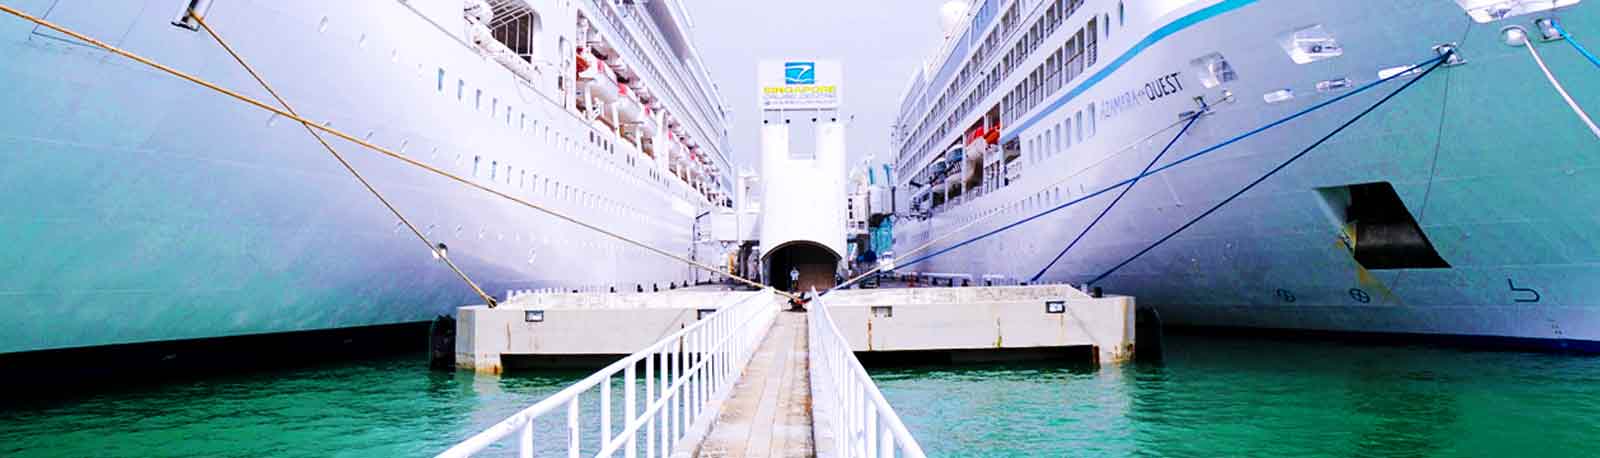 Top 10 Hotels near Singapore Cruise Ship Terminal (Marina Bay)